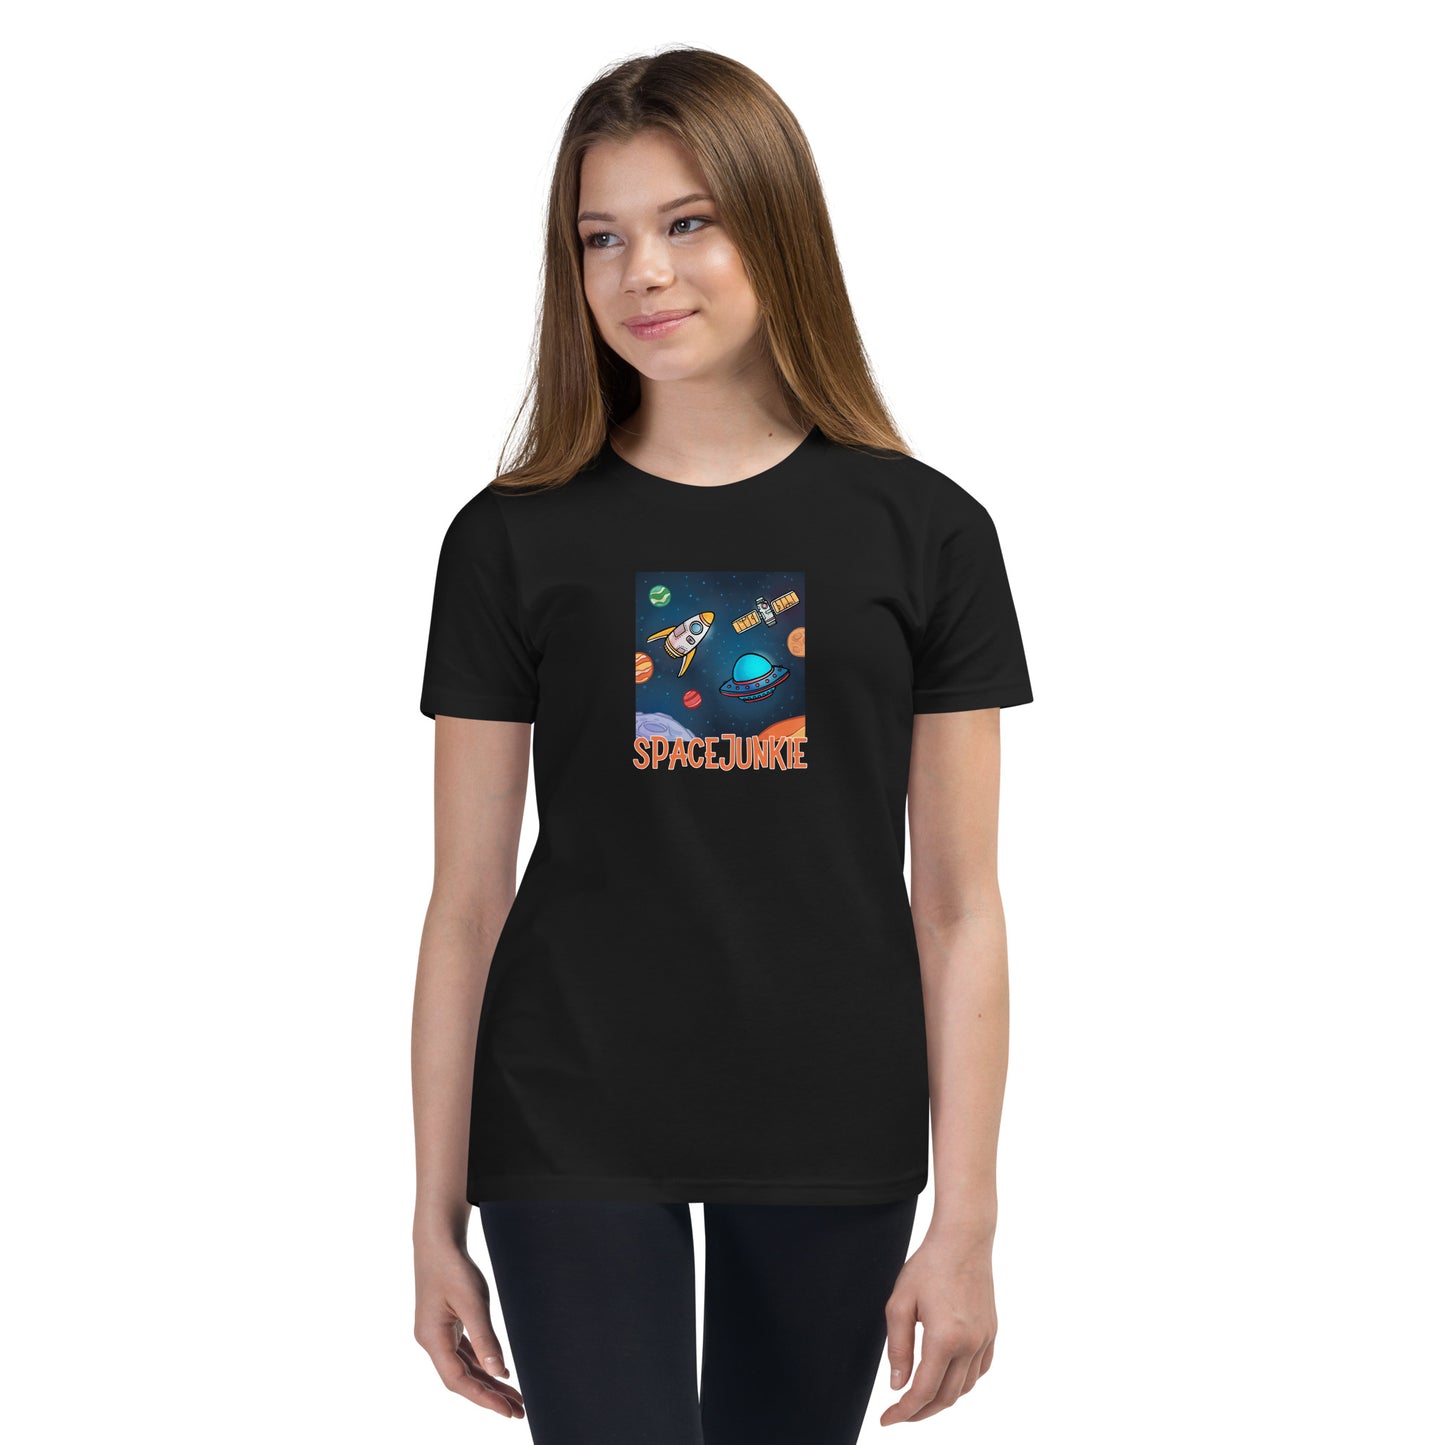 Fiatal felfedező Spacejunkie unisex póló